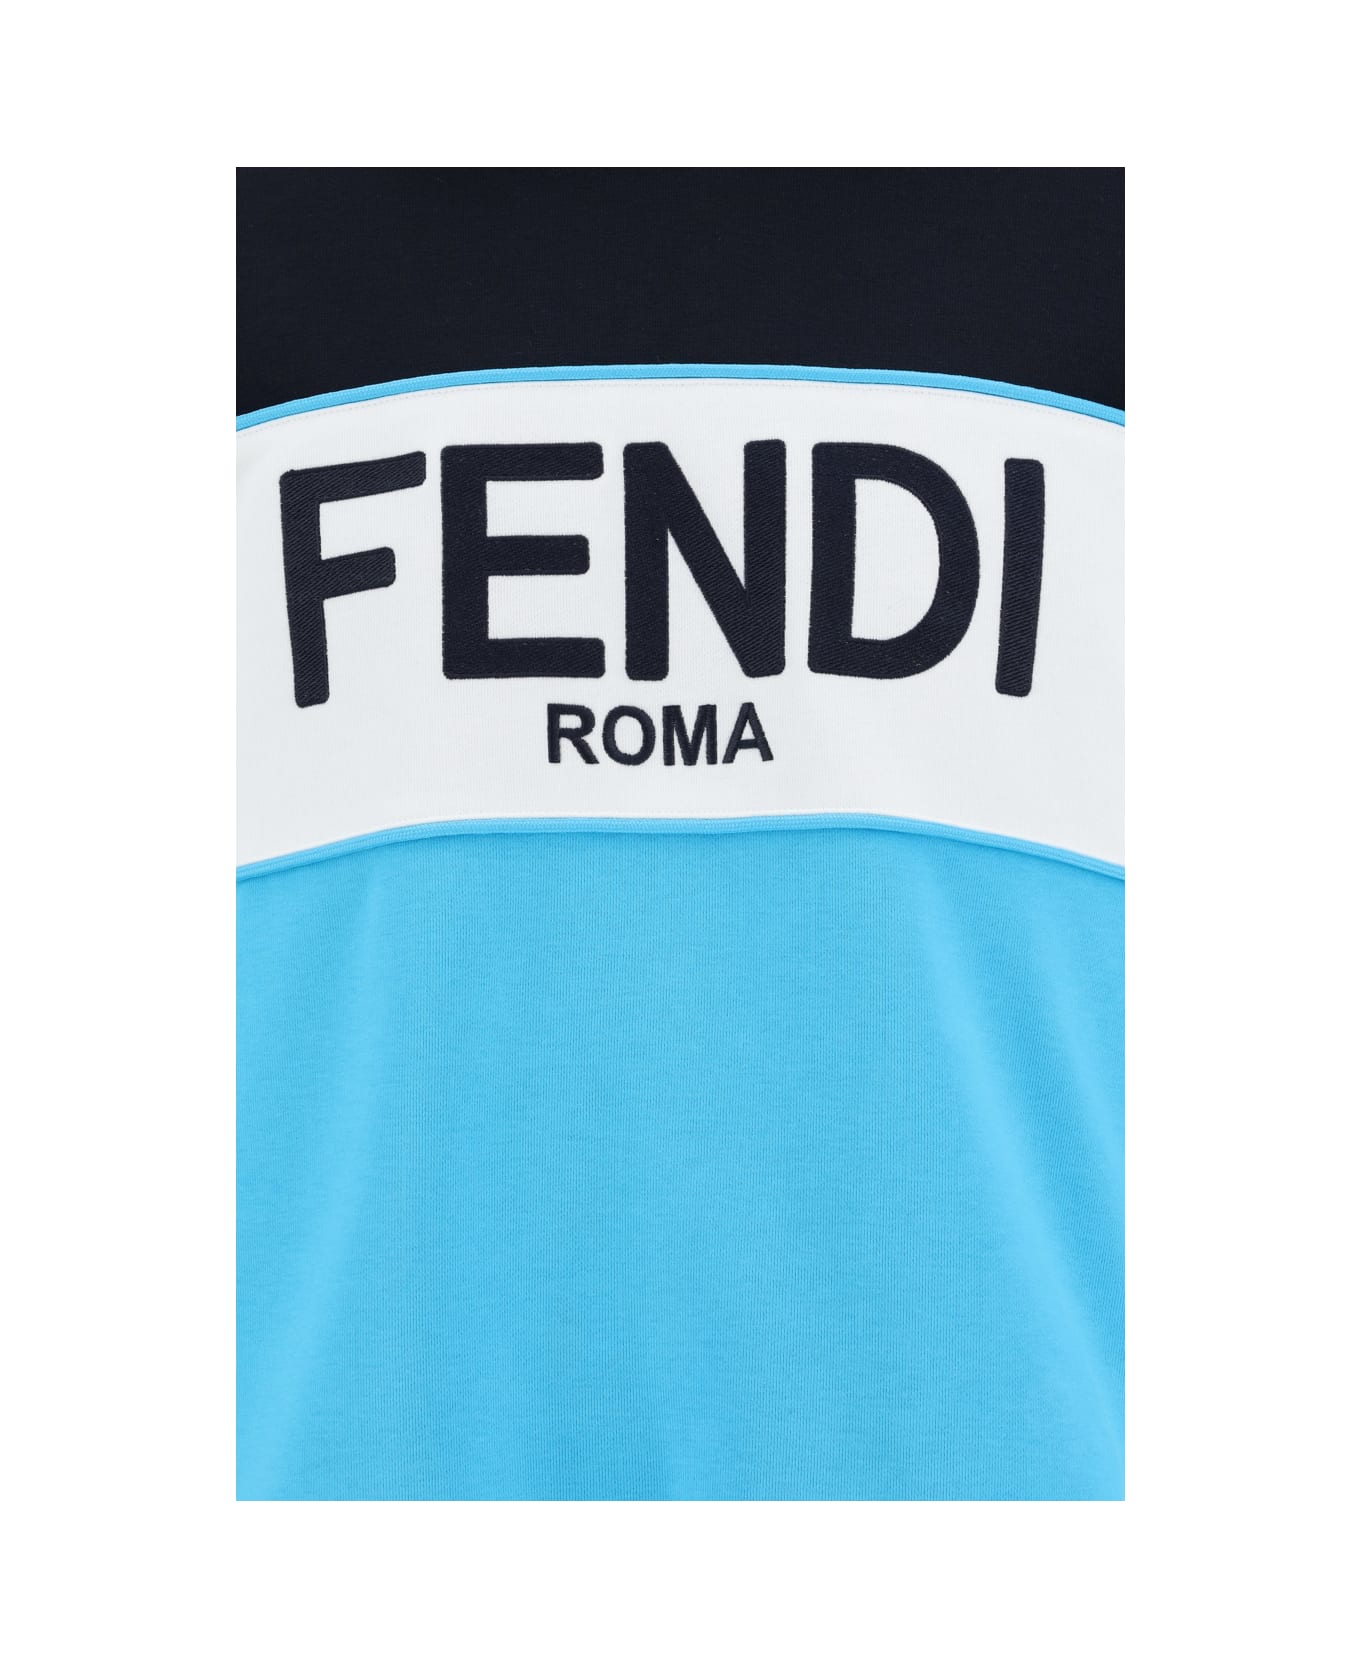 Fendi Logo Hooded Sweatshirt - Blue